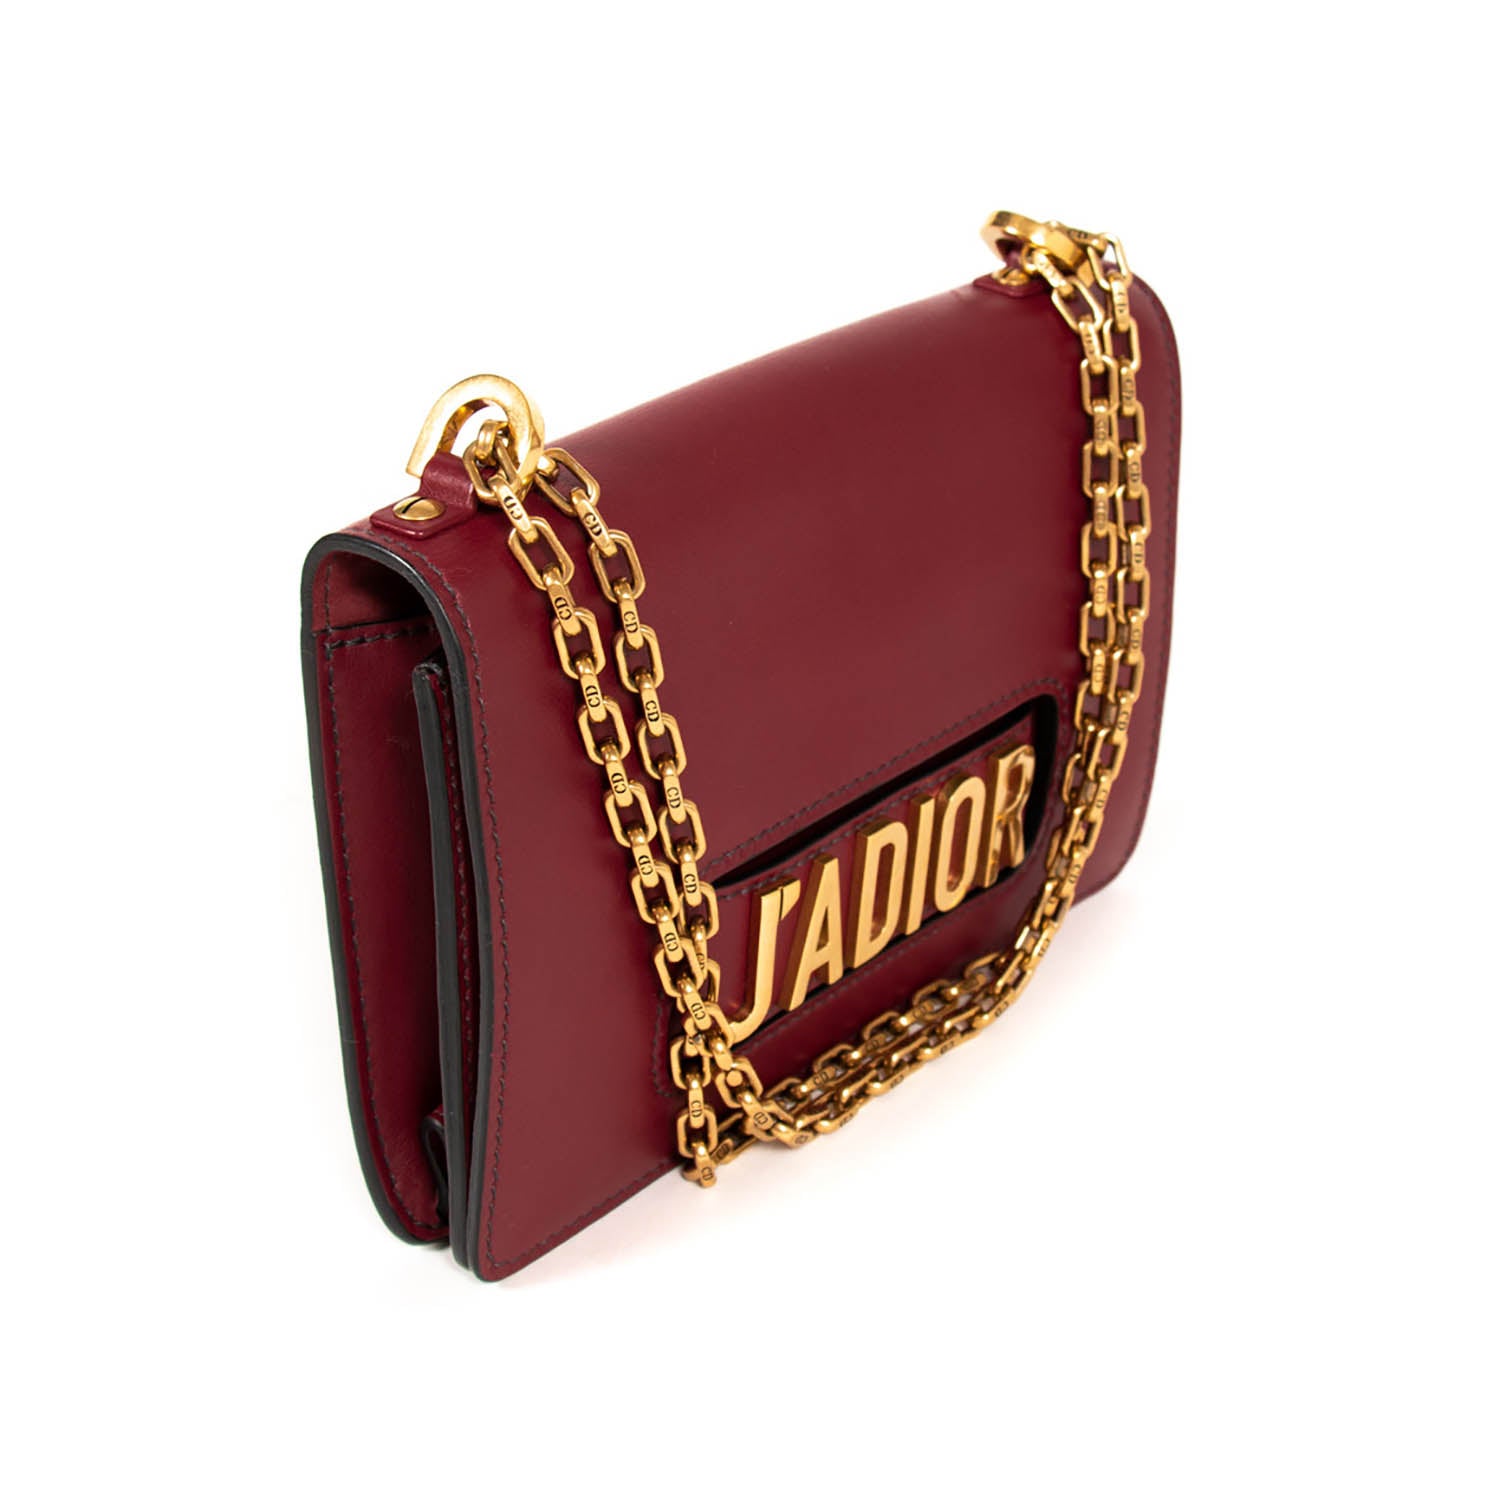 Shop authentic Christian Dior J'adior Shoulder Bag at revogue for just